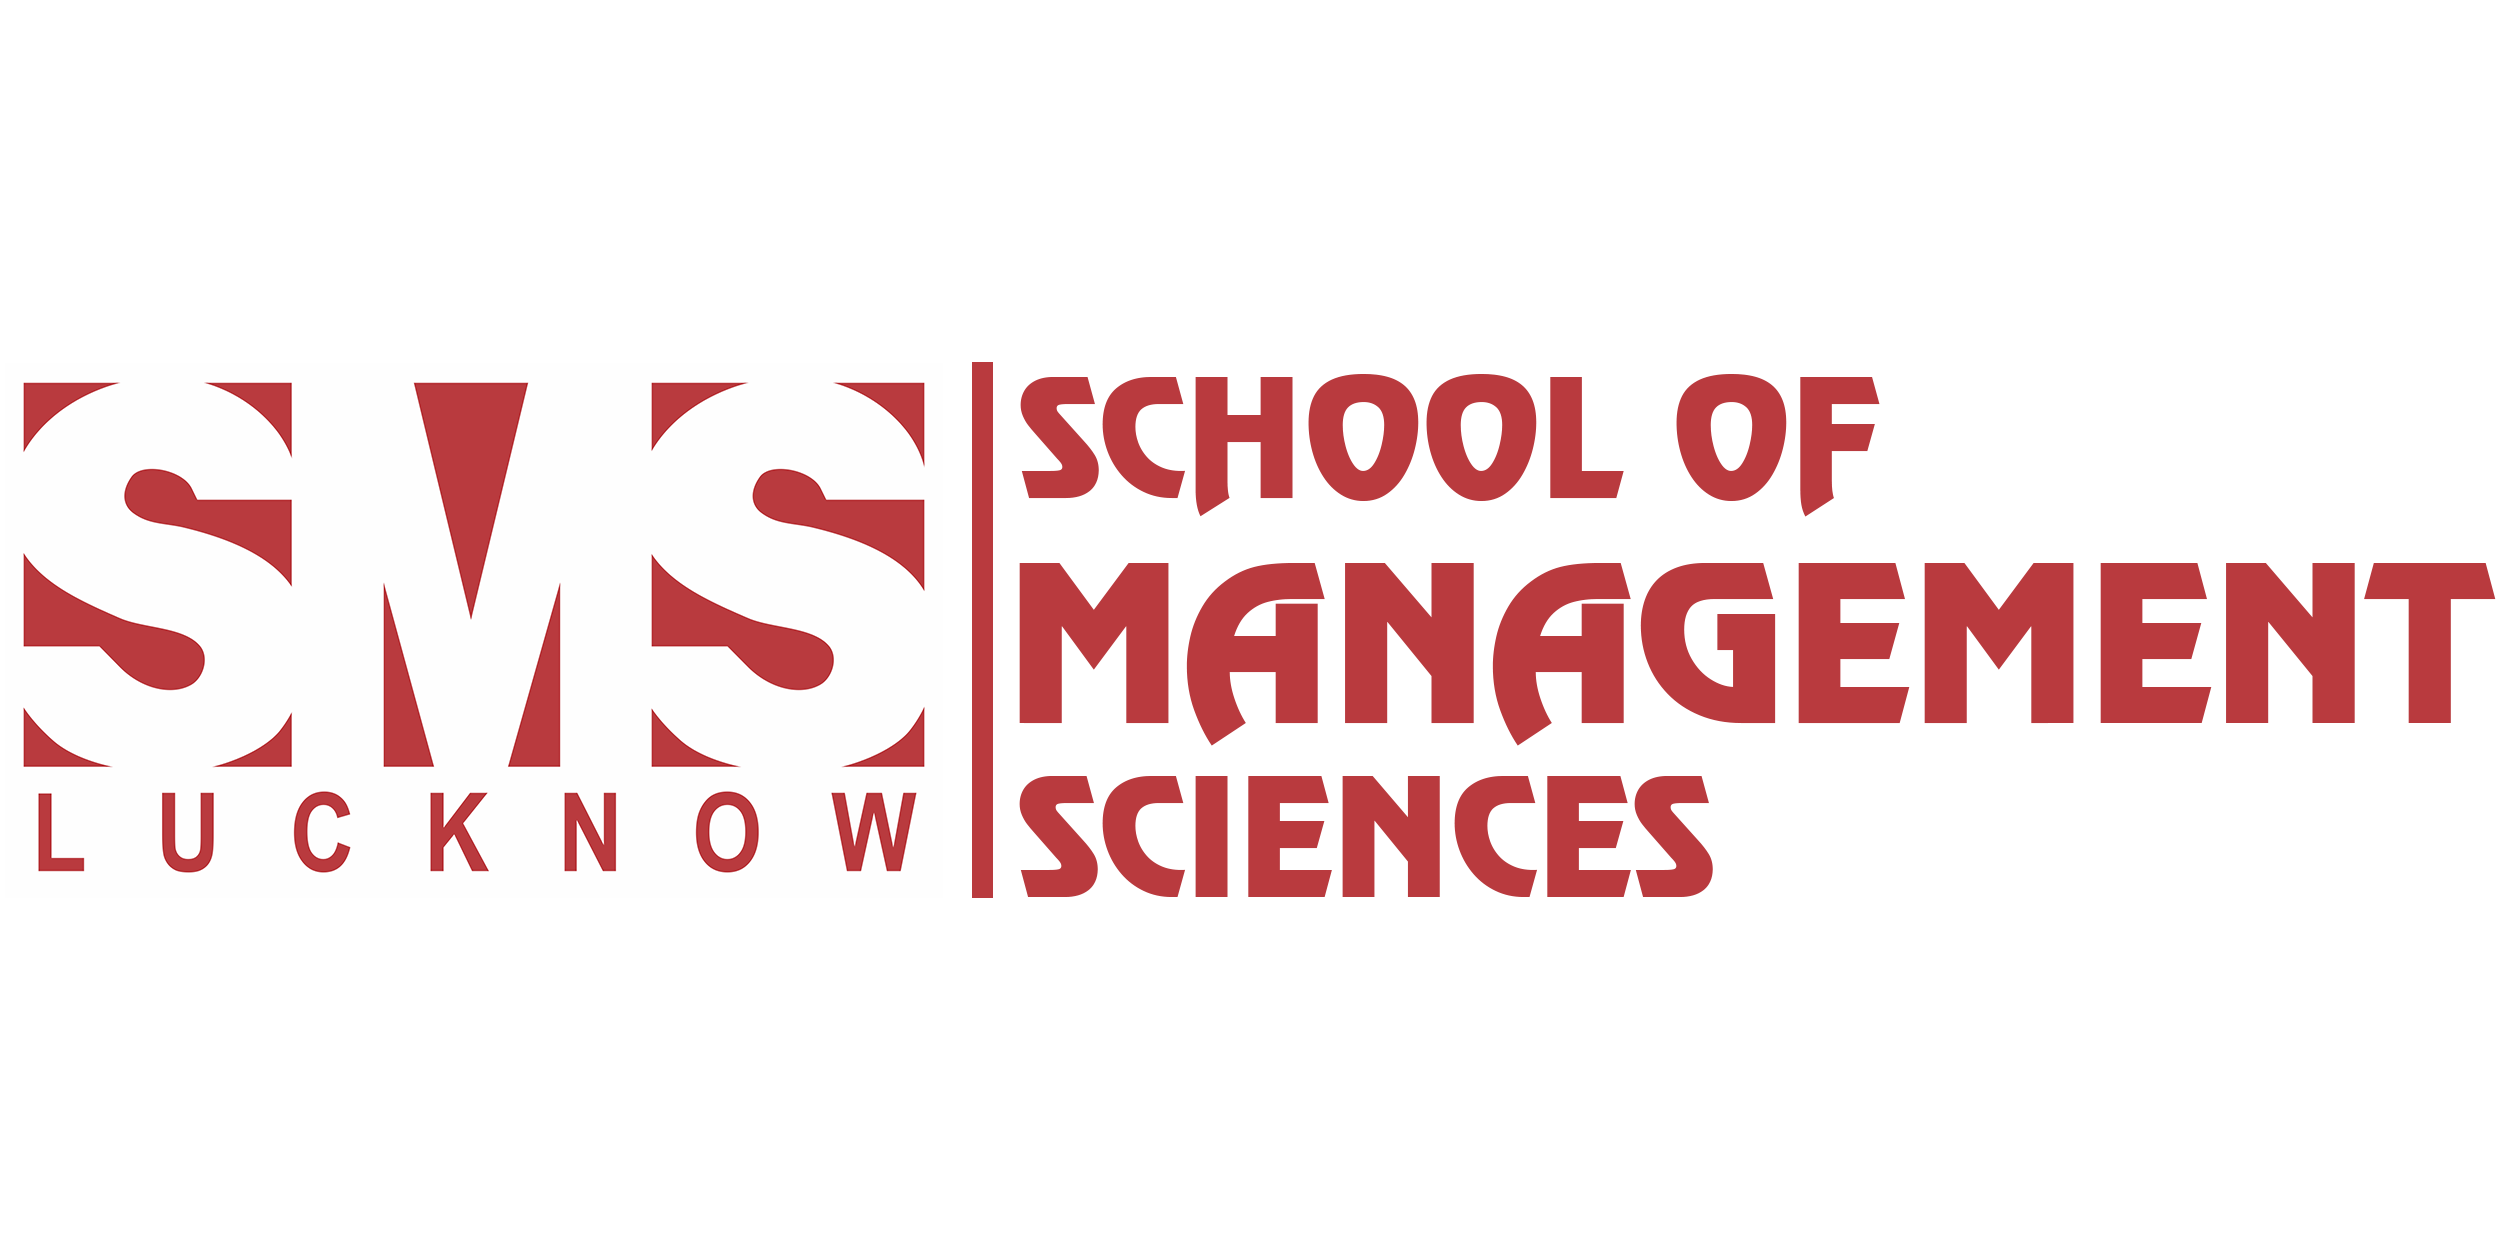 School of Management Sciences Logo